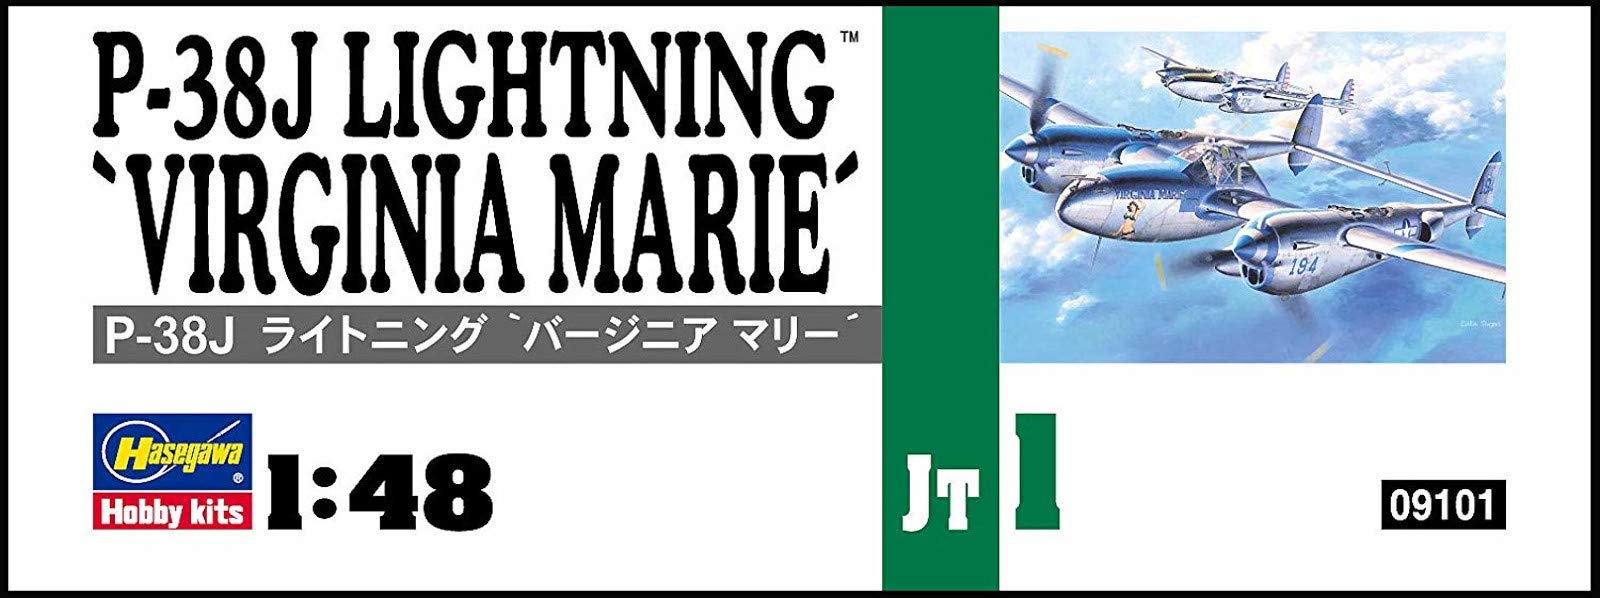 HASEGAWA 1/48 P-38J Lightning 'Virginia Marie' U.S. Army Air Force Fighter Plastic Model